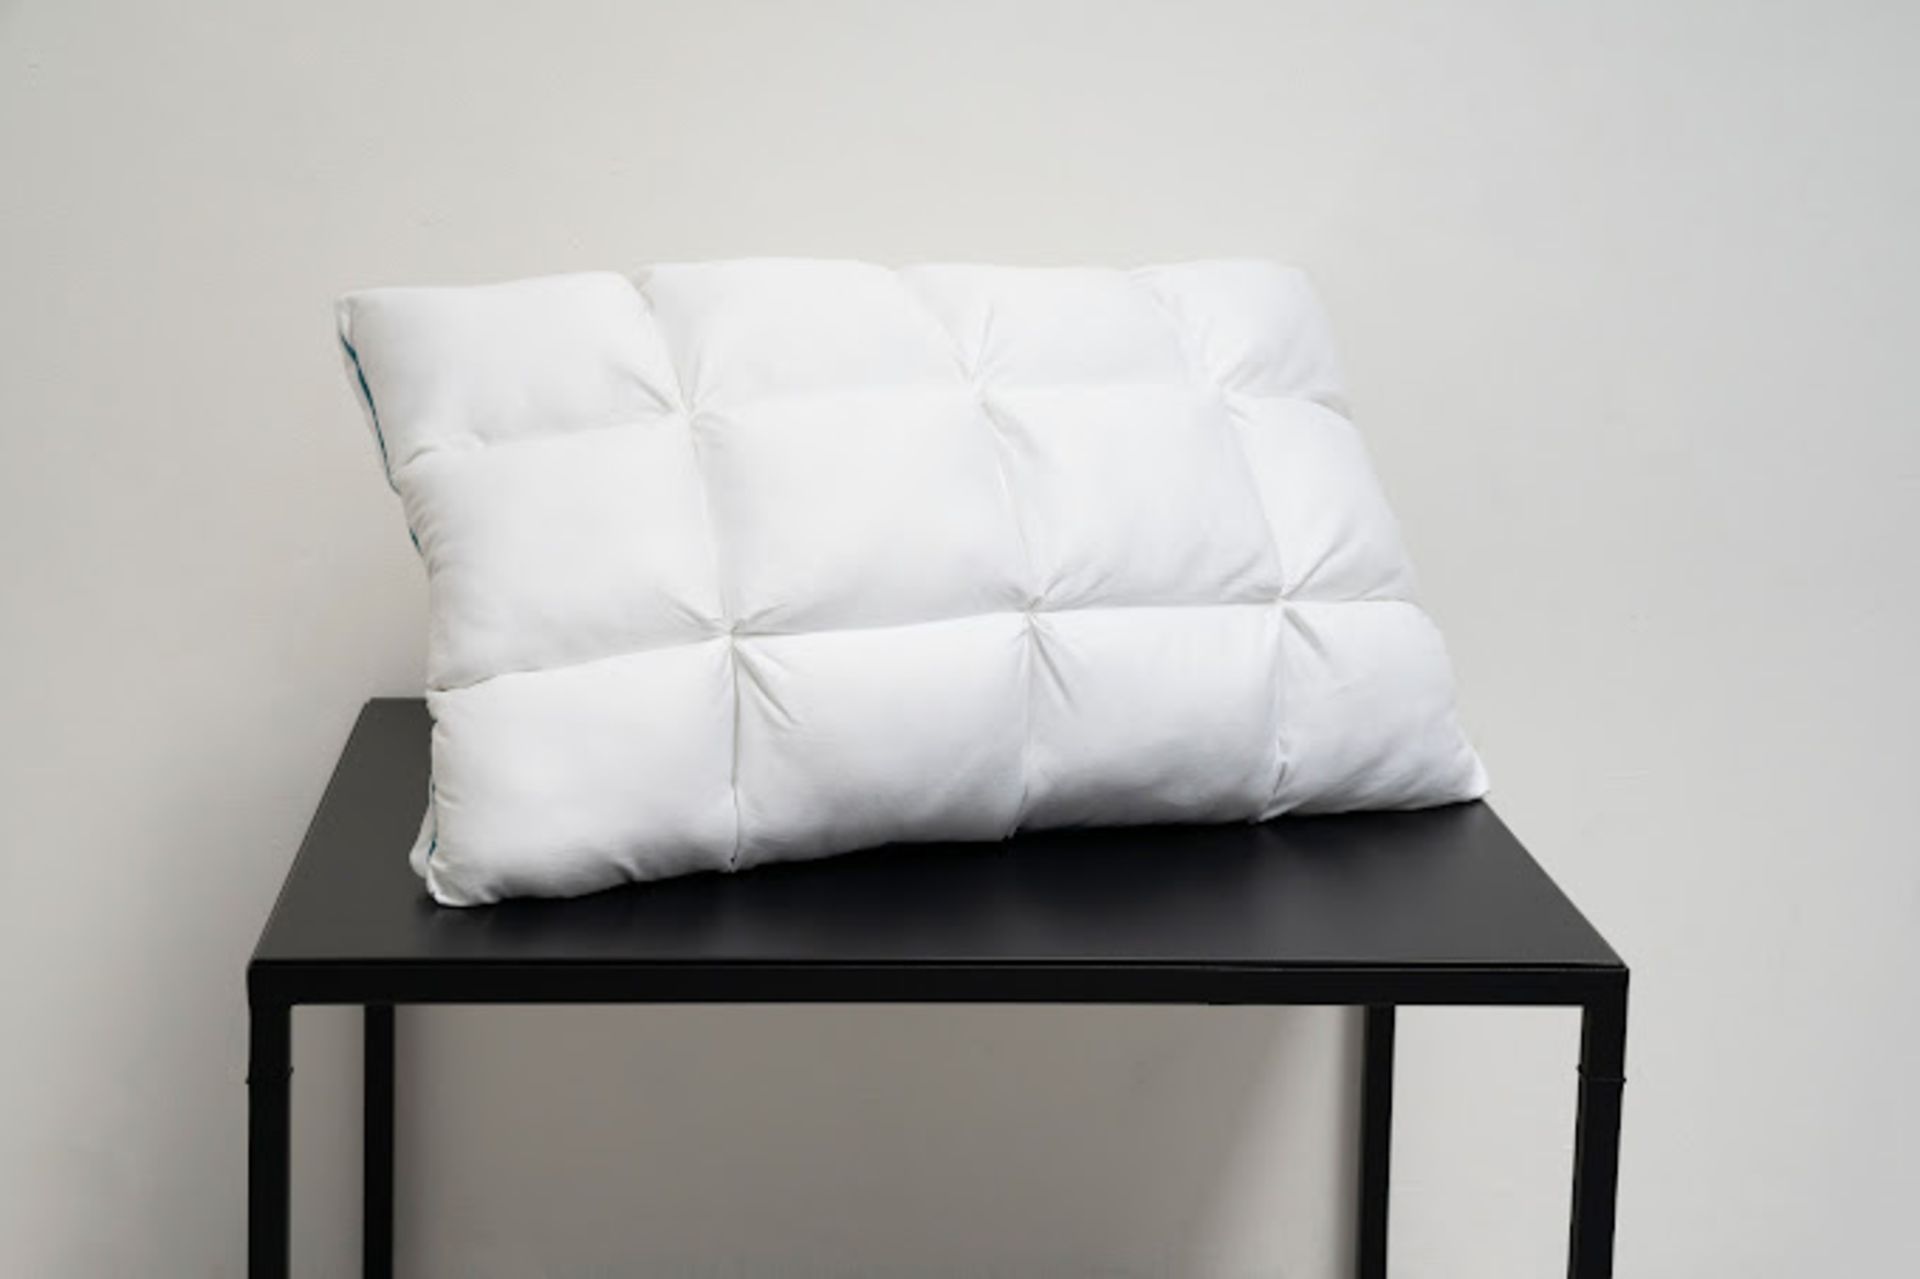 2 x ComfaSleep PL0001 Pillows - Image 8 of 20